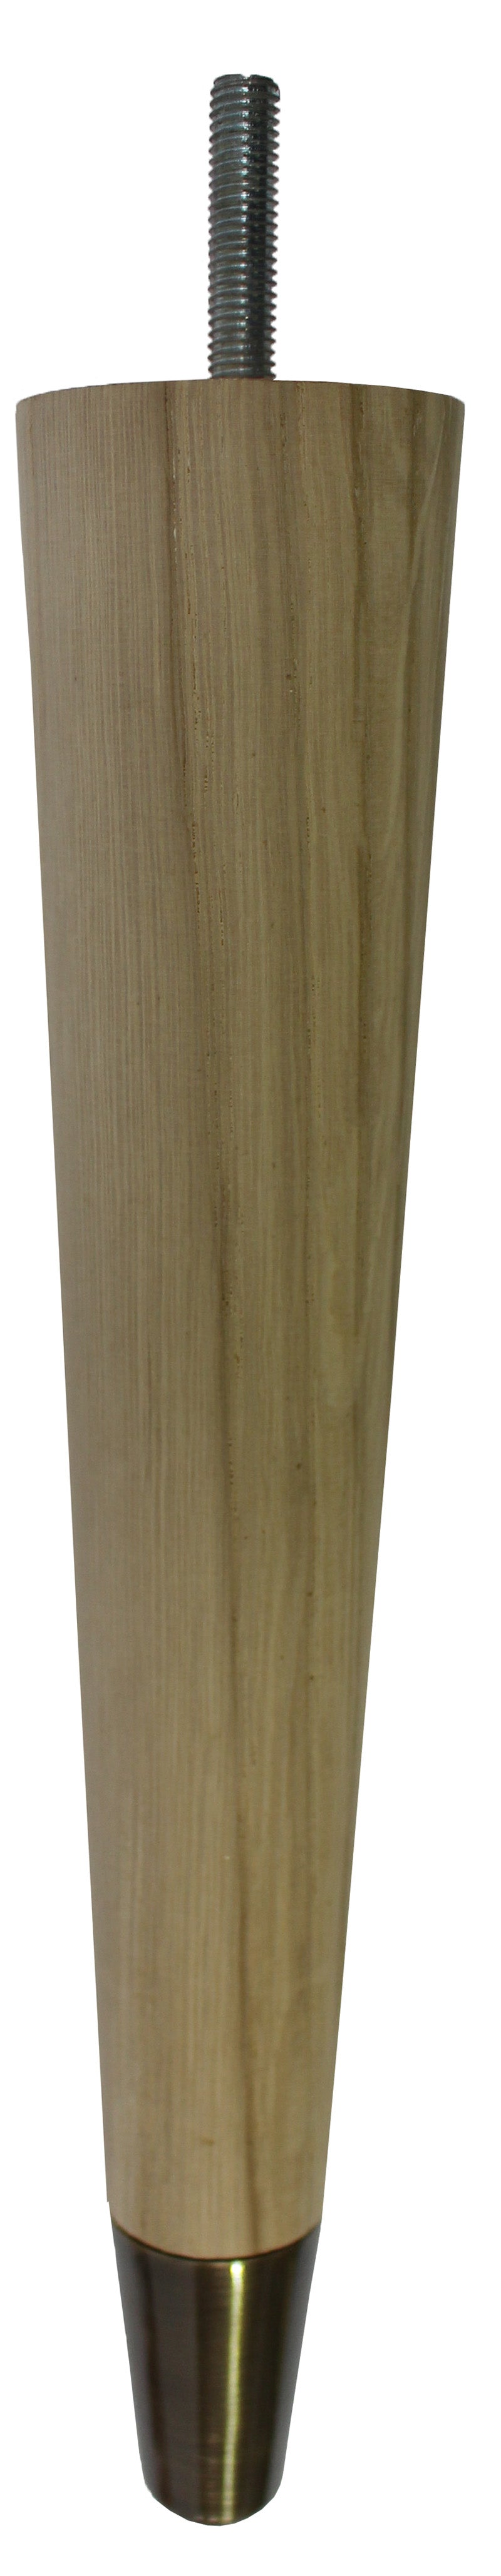 Liva Solid Oak Tapered Furniture Legs - Raw Finish - Antique Slipper Cups - Set of 4